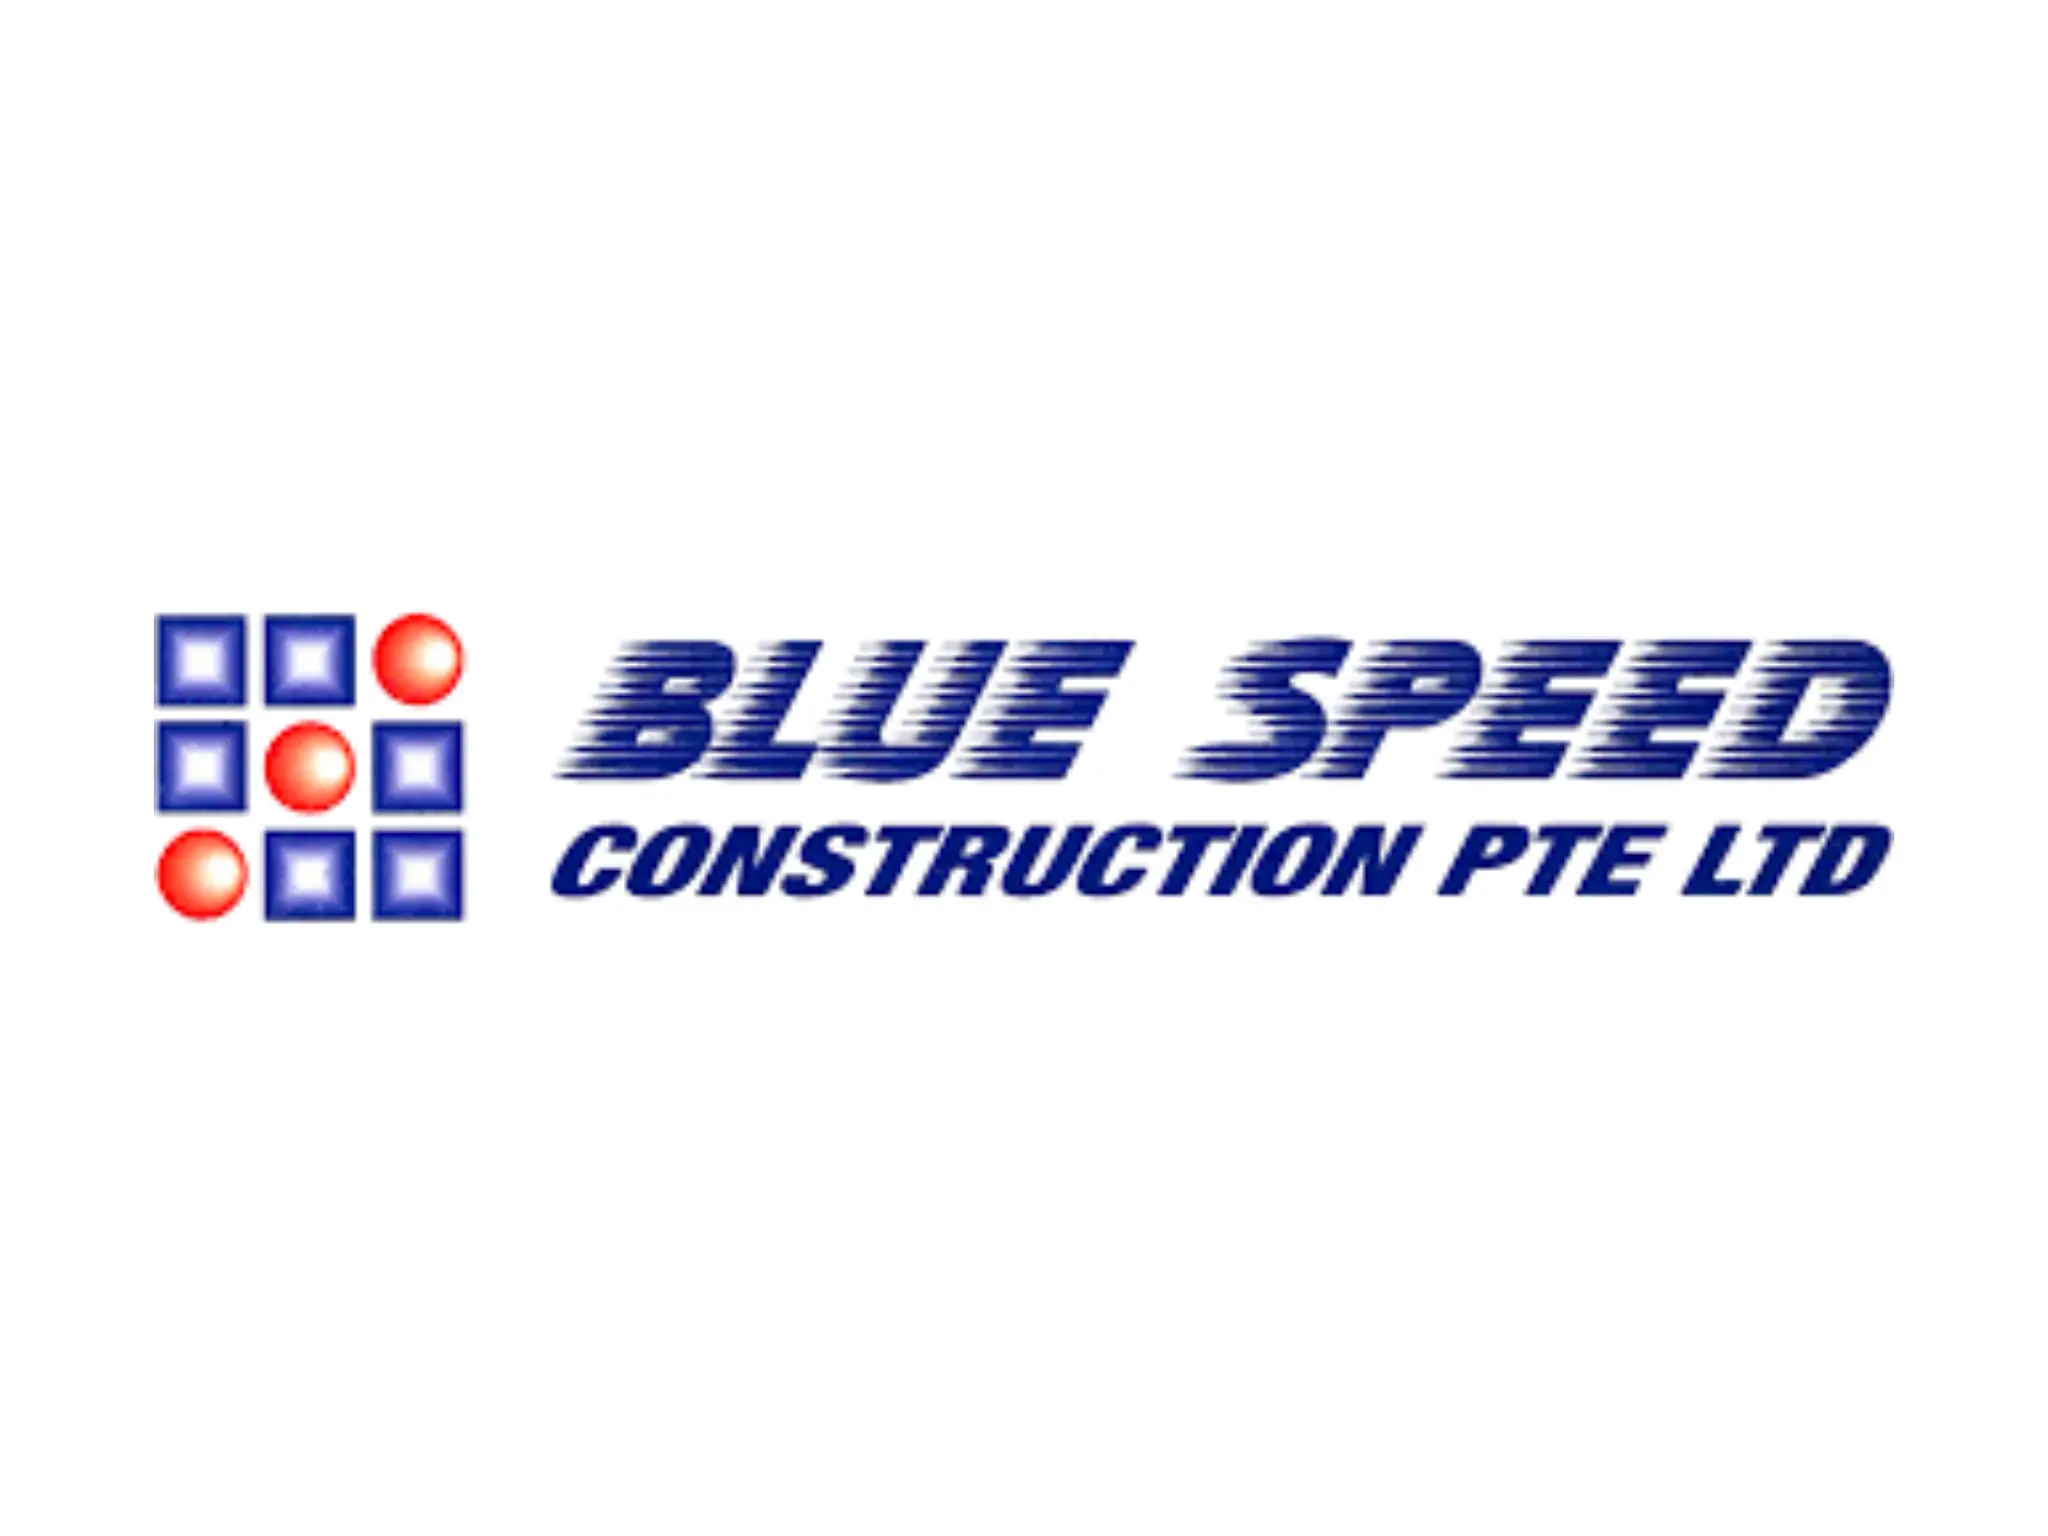 BLUE SPEED CONSTRUCTION